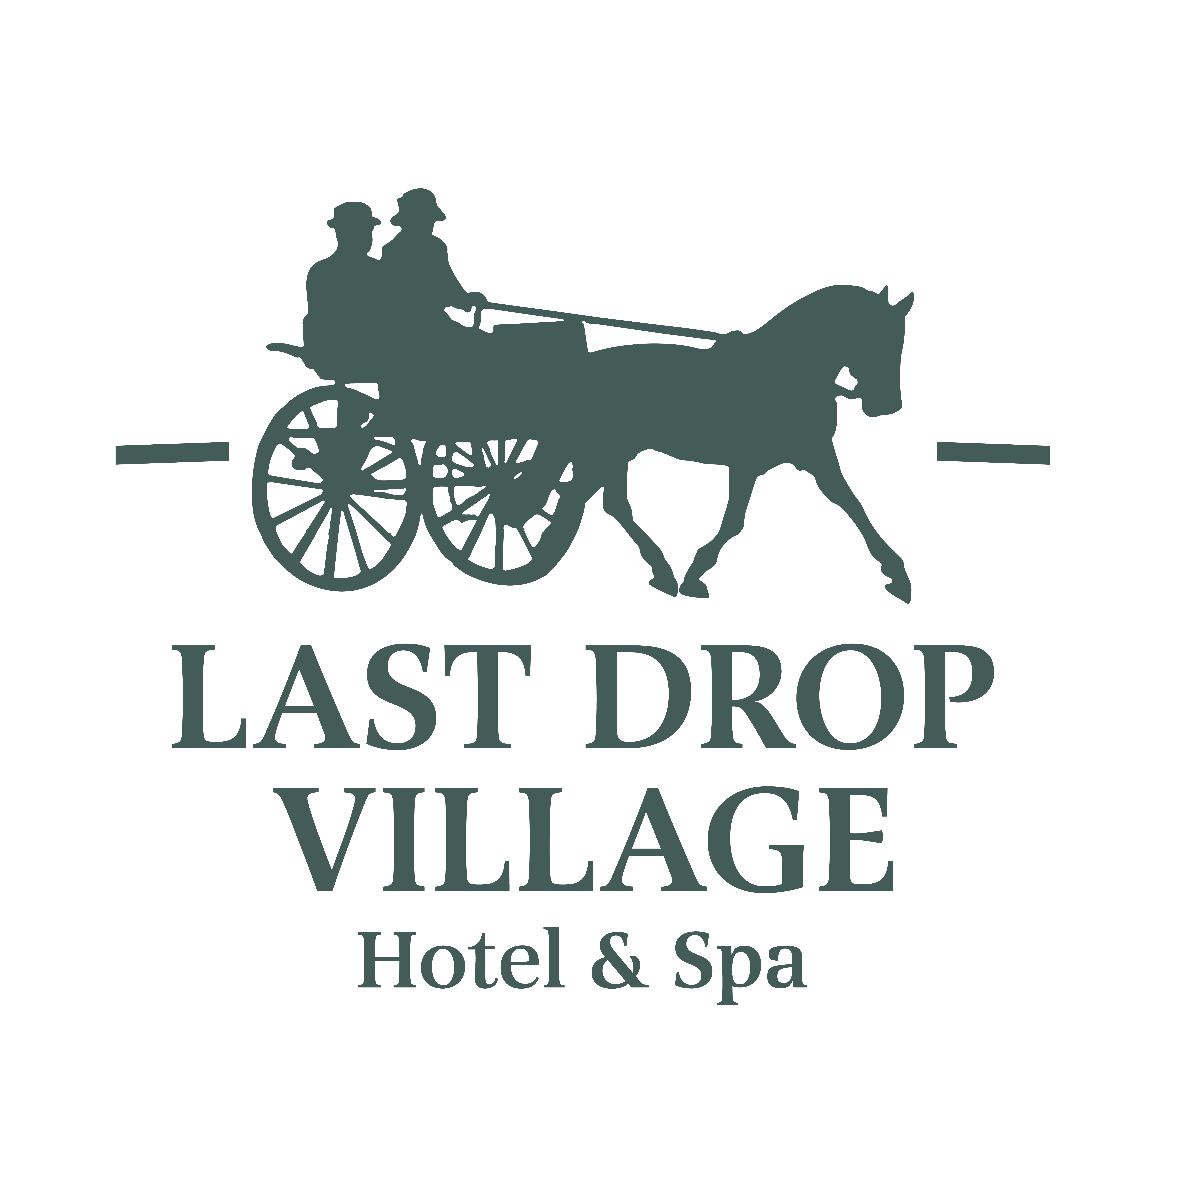 Gallery Item 21 for Last Drop Village Hotel & Spa